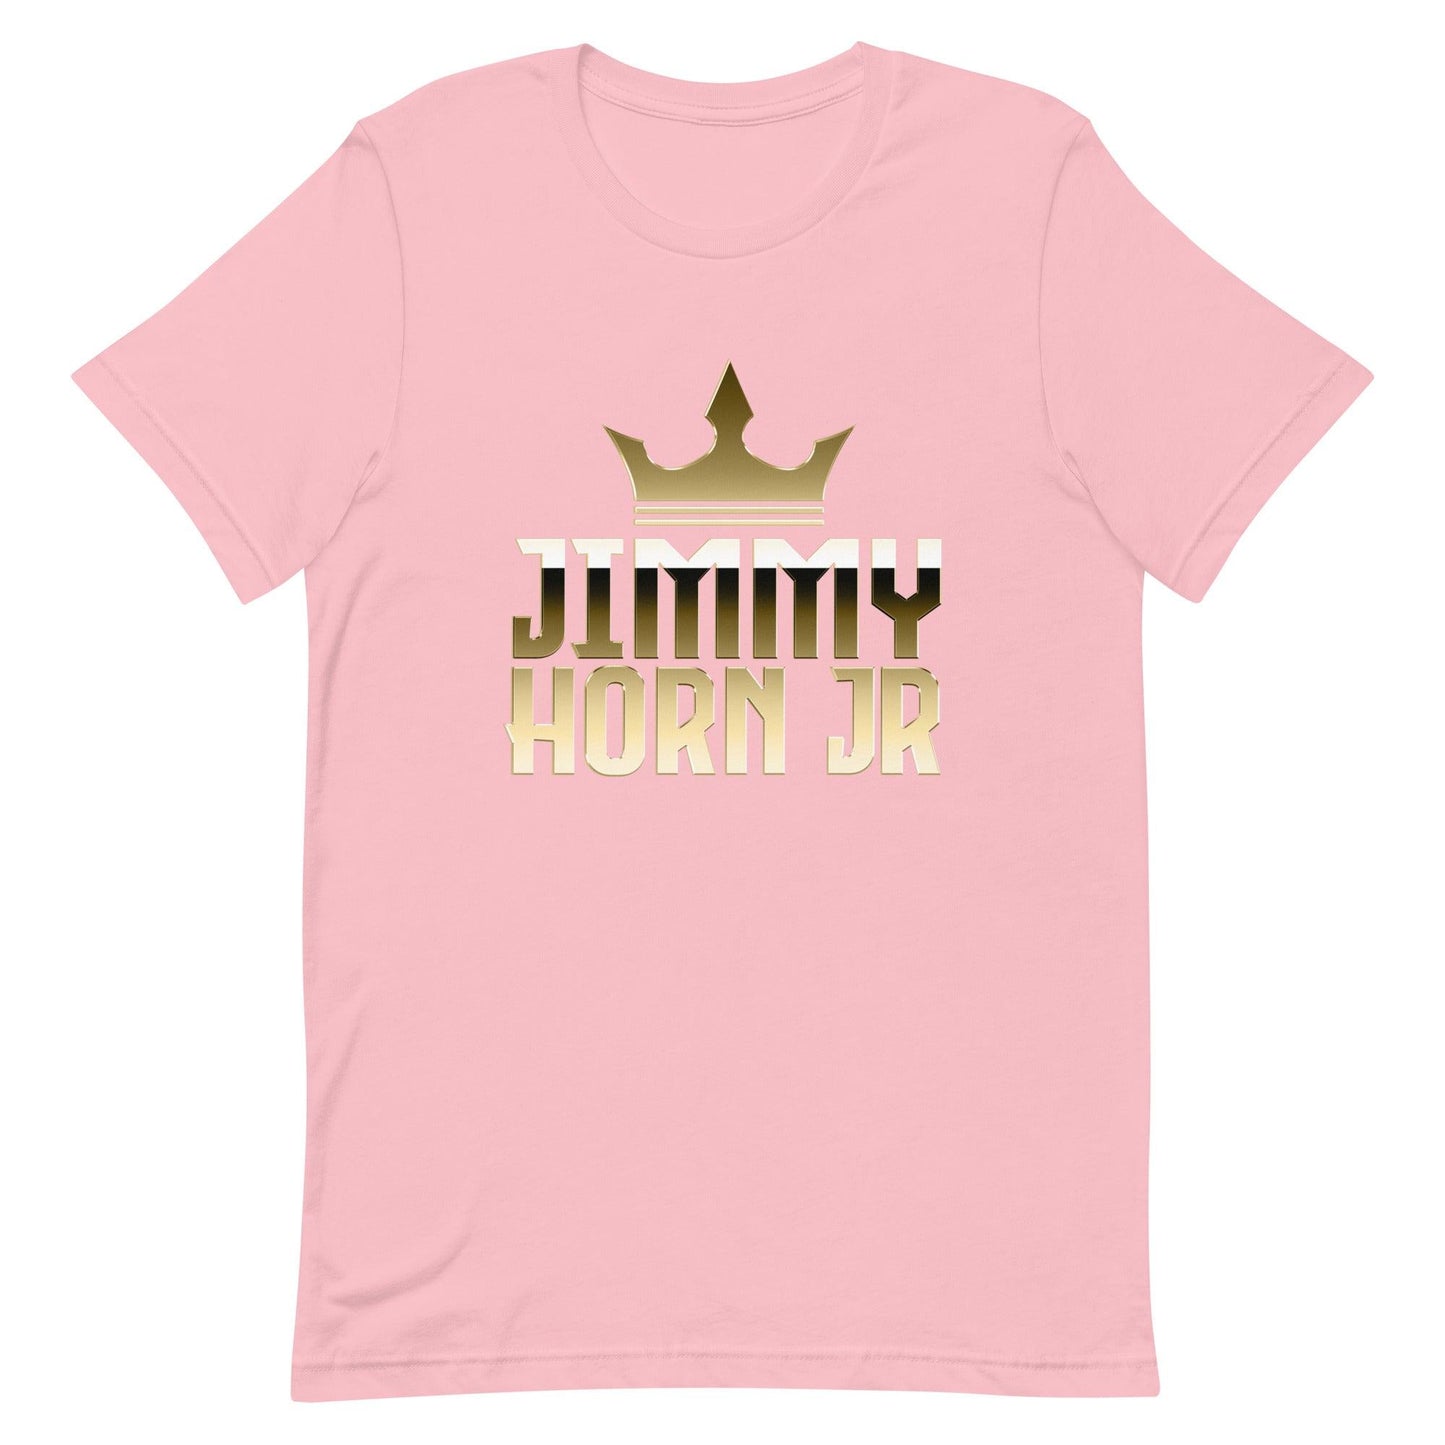 Jimmy Horn Jr. "Essential" t-shirt - Fan Arch